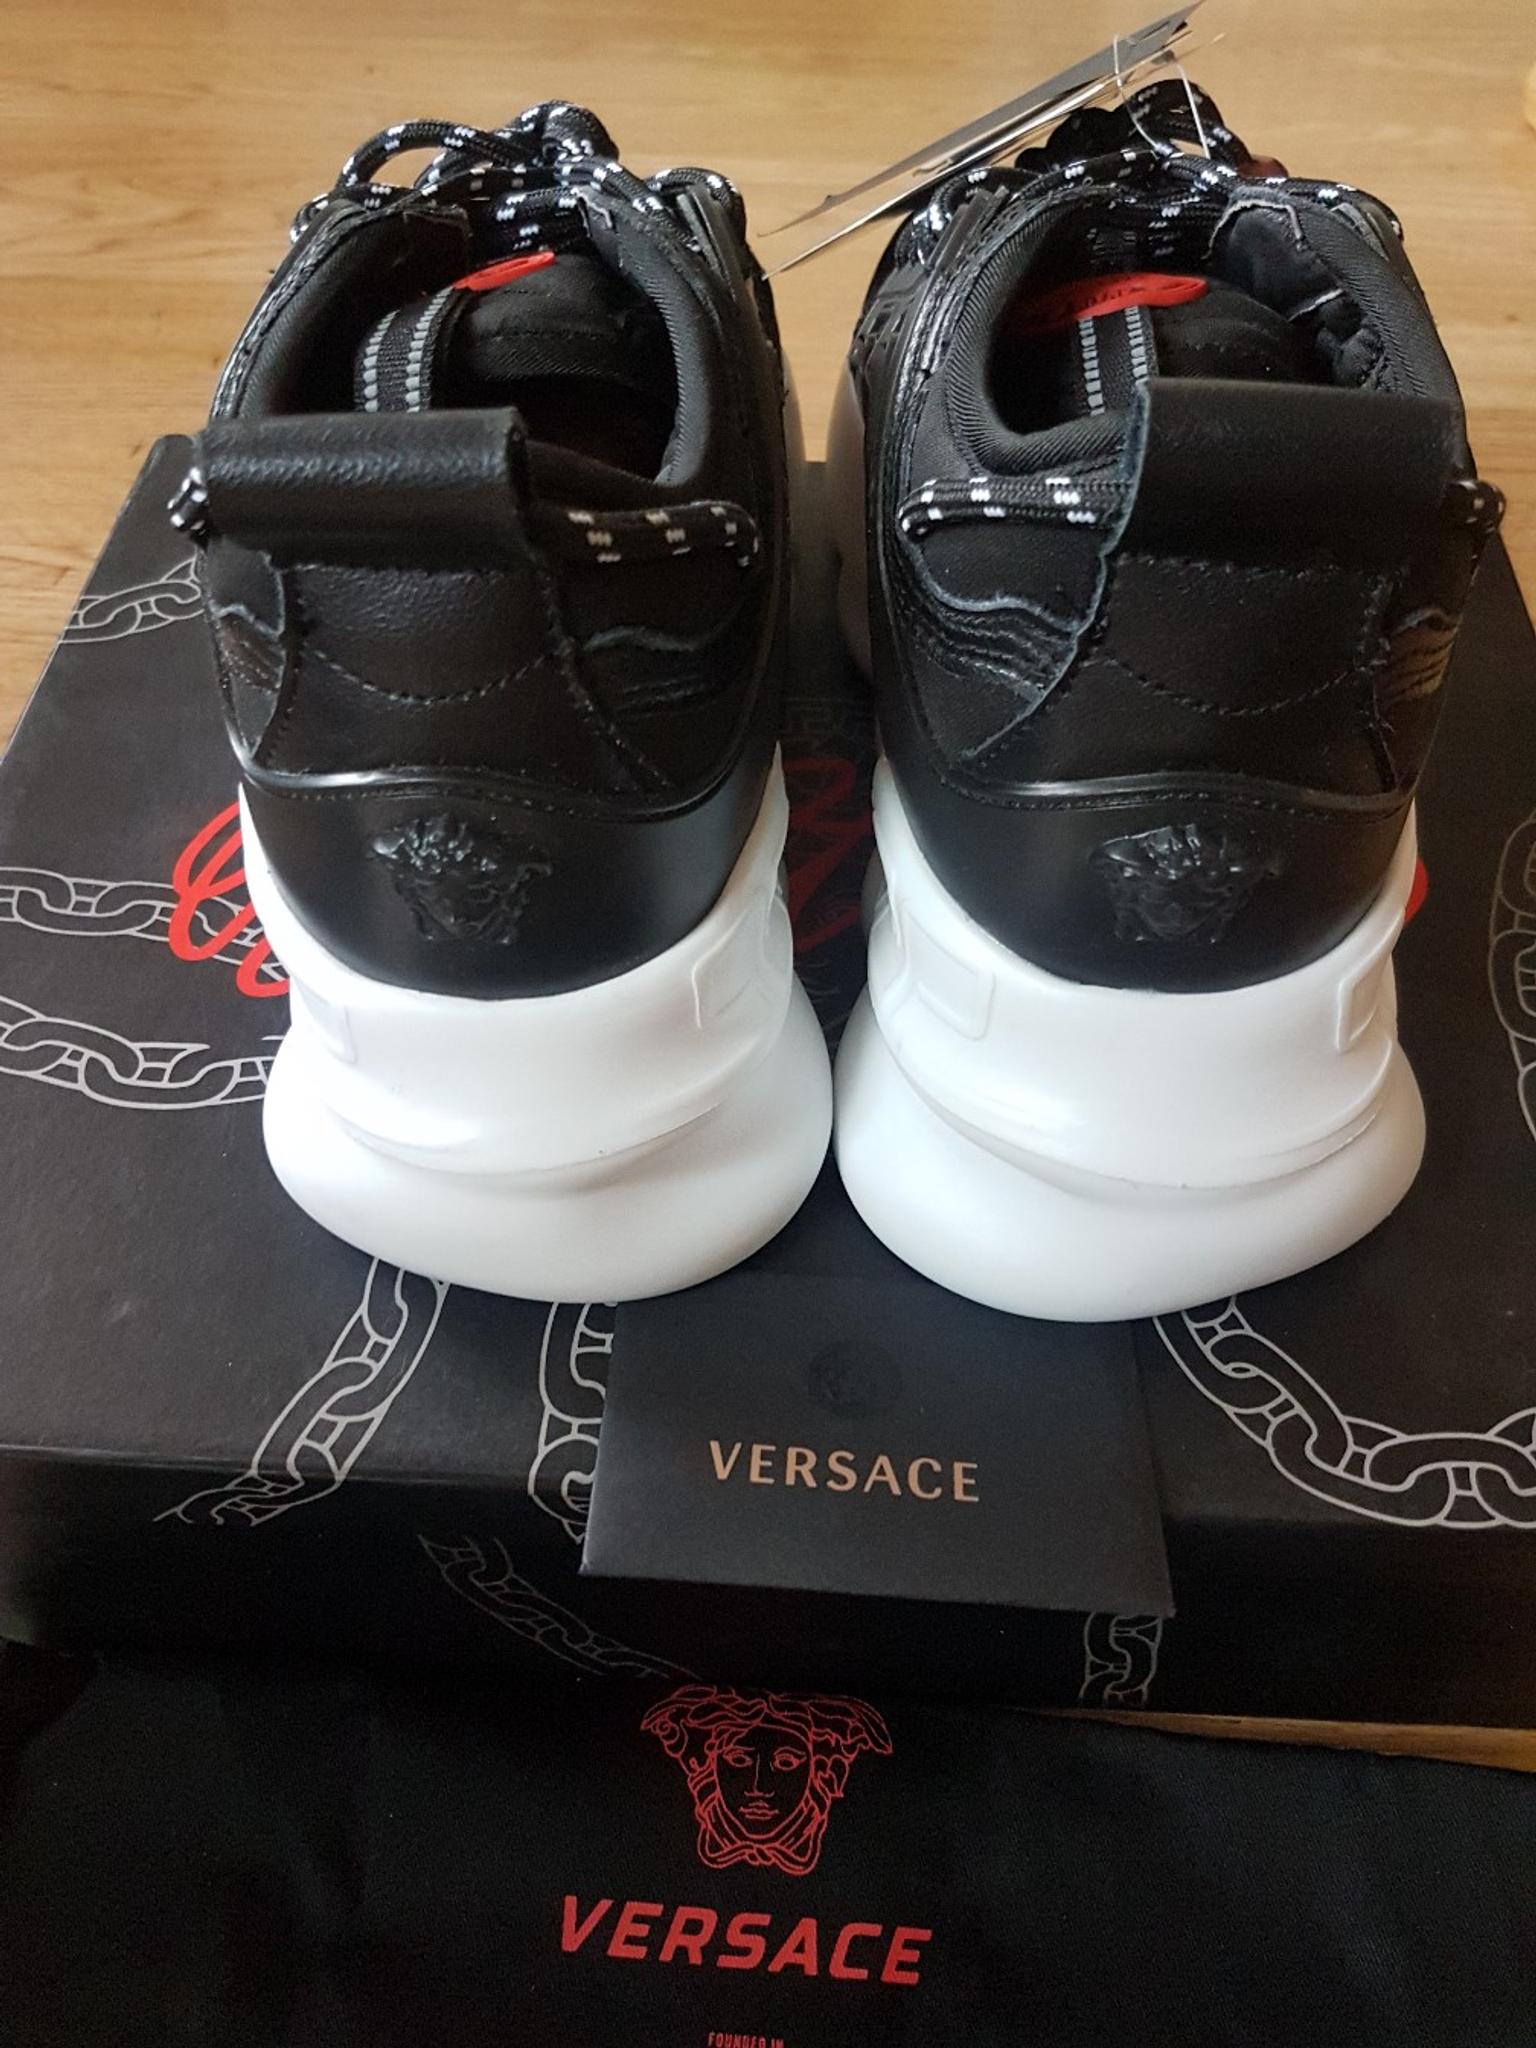 fake versace shoes vs real